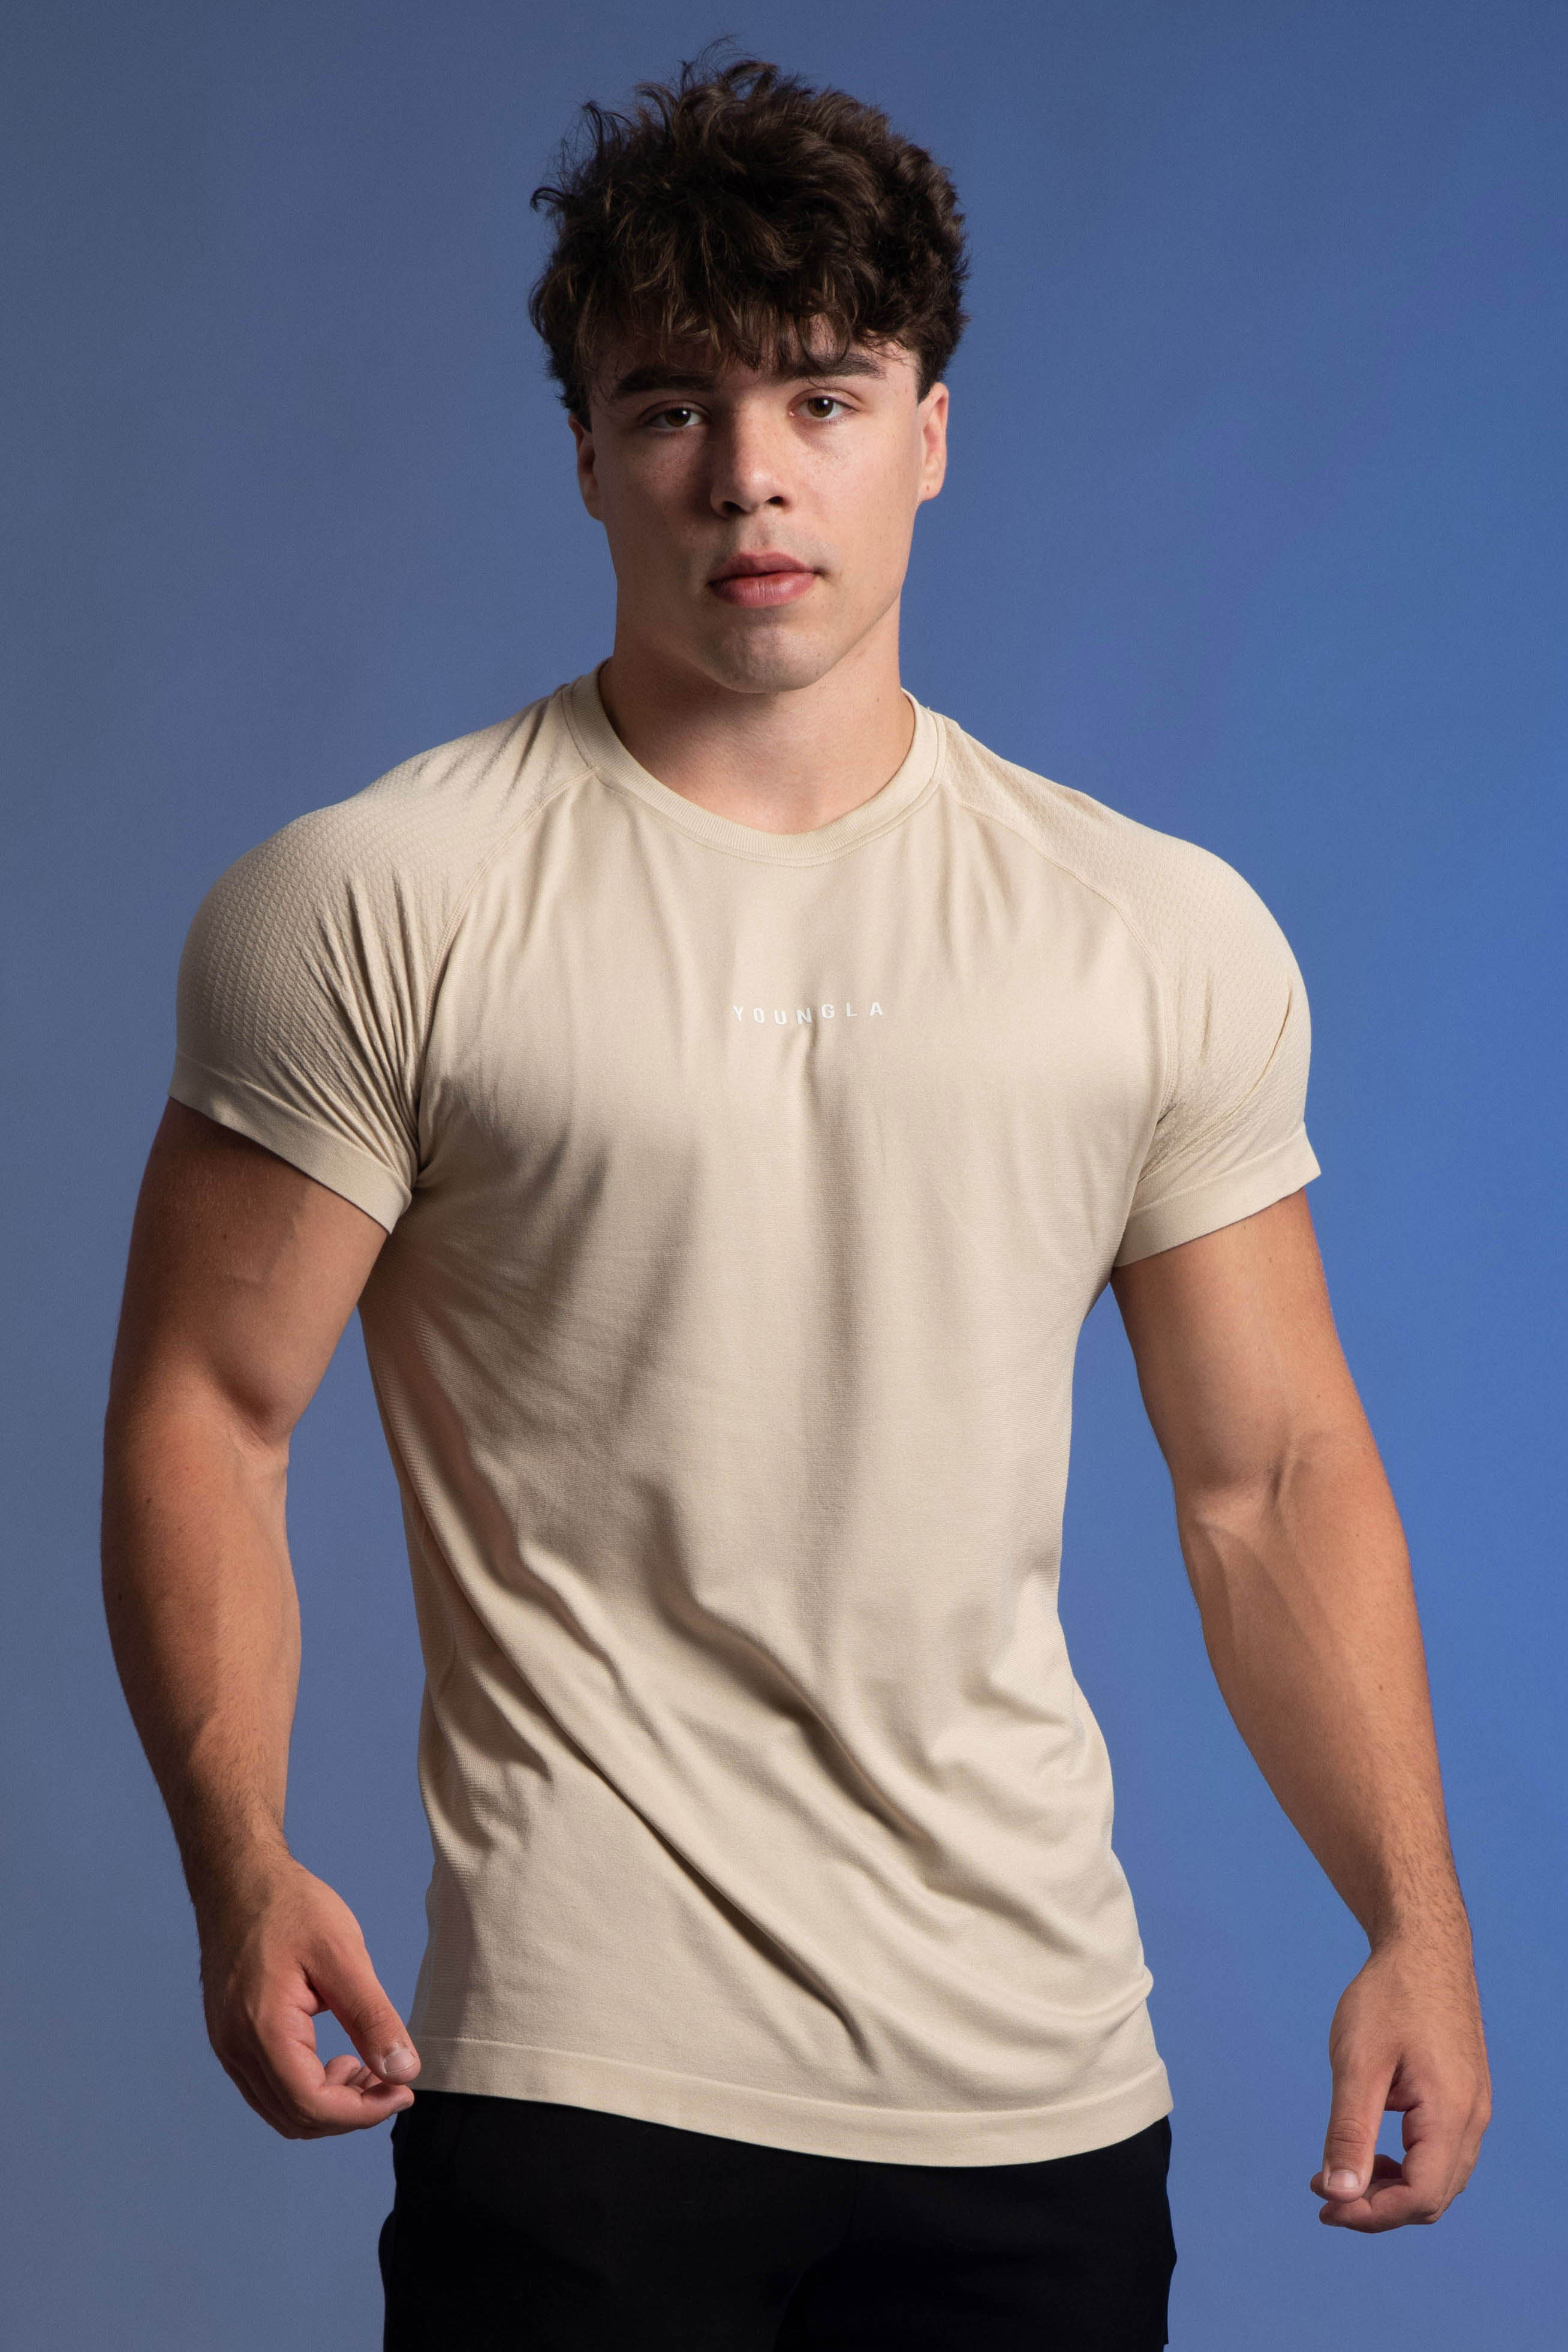 YoungLA Men's Short Sleeve Compression Shirt, Palestine